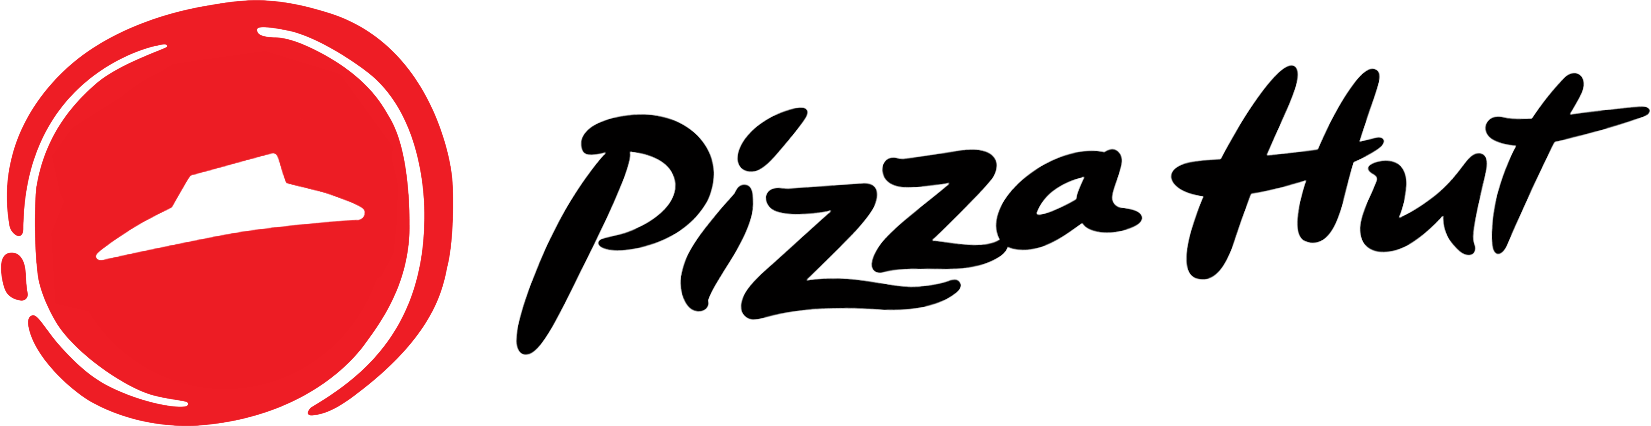 Pizza Hut Logo - Image - PizzaHut-logo.png | Logopedia | FANDOM powered by Wikia